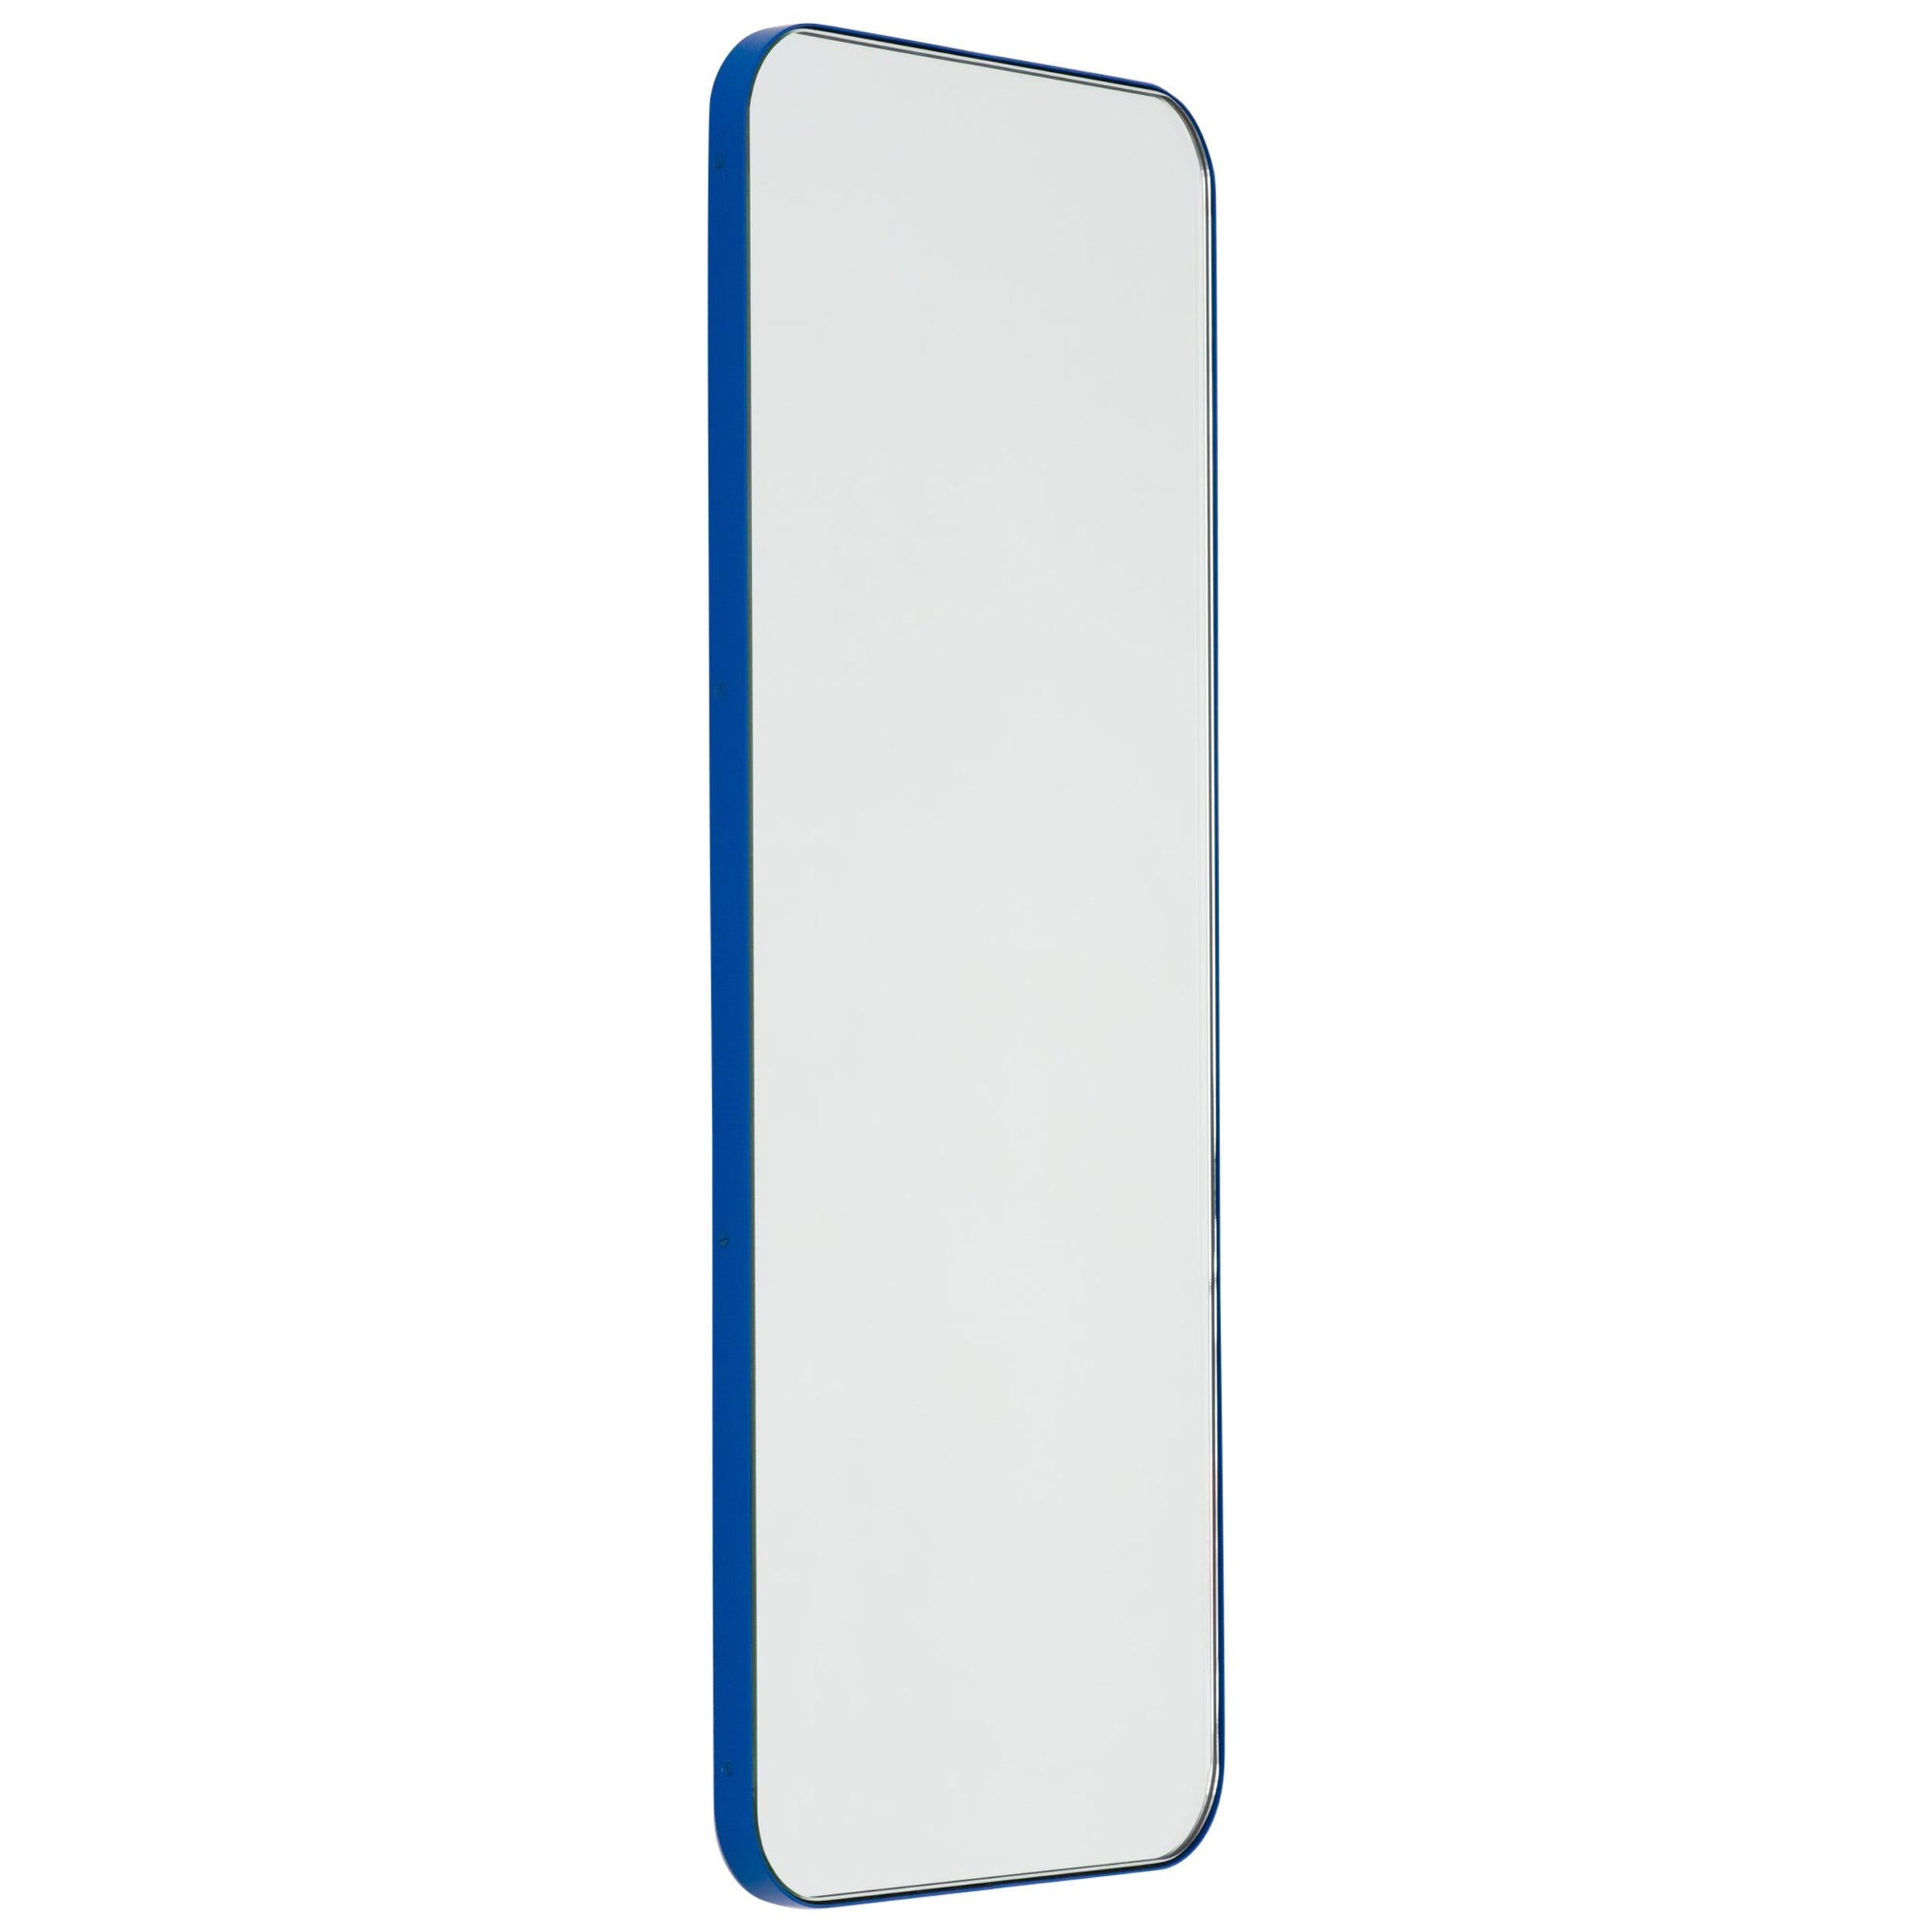 Quadris Rectangular Modern Mirror with a Blue Frame, Medium